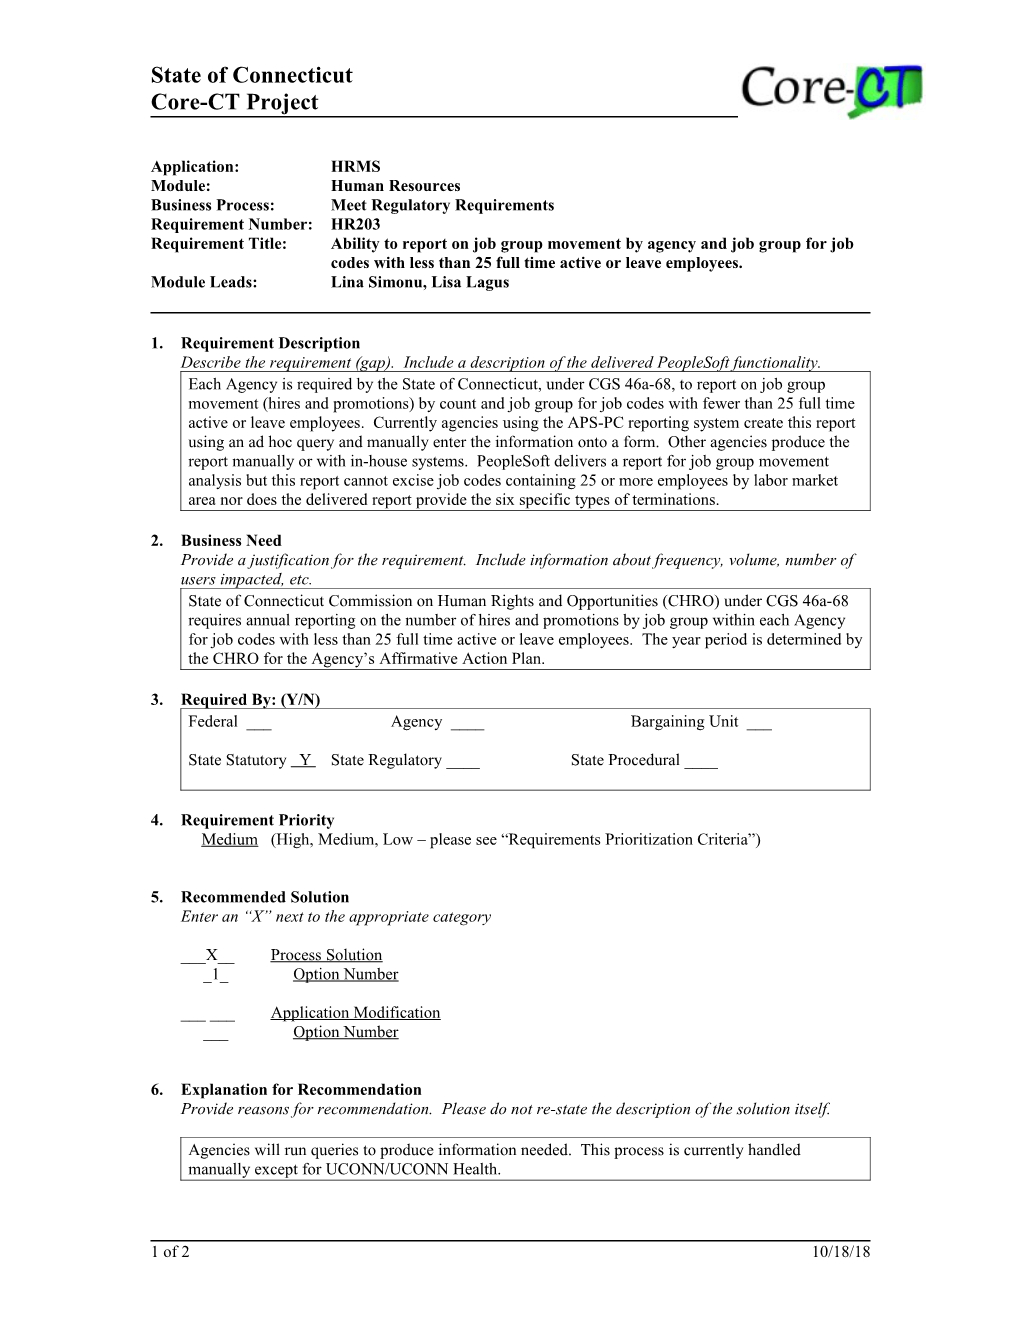 HR203 AAP Job Group Movement Analysis Report